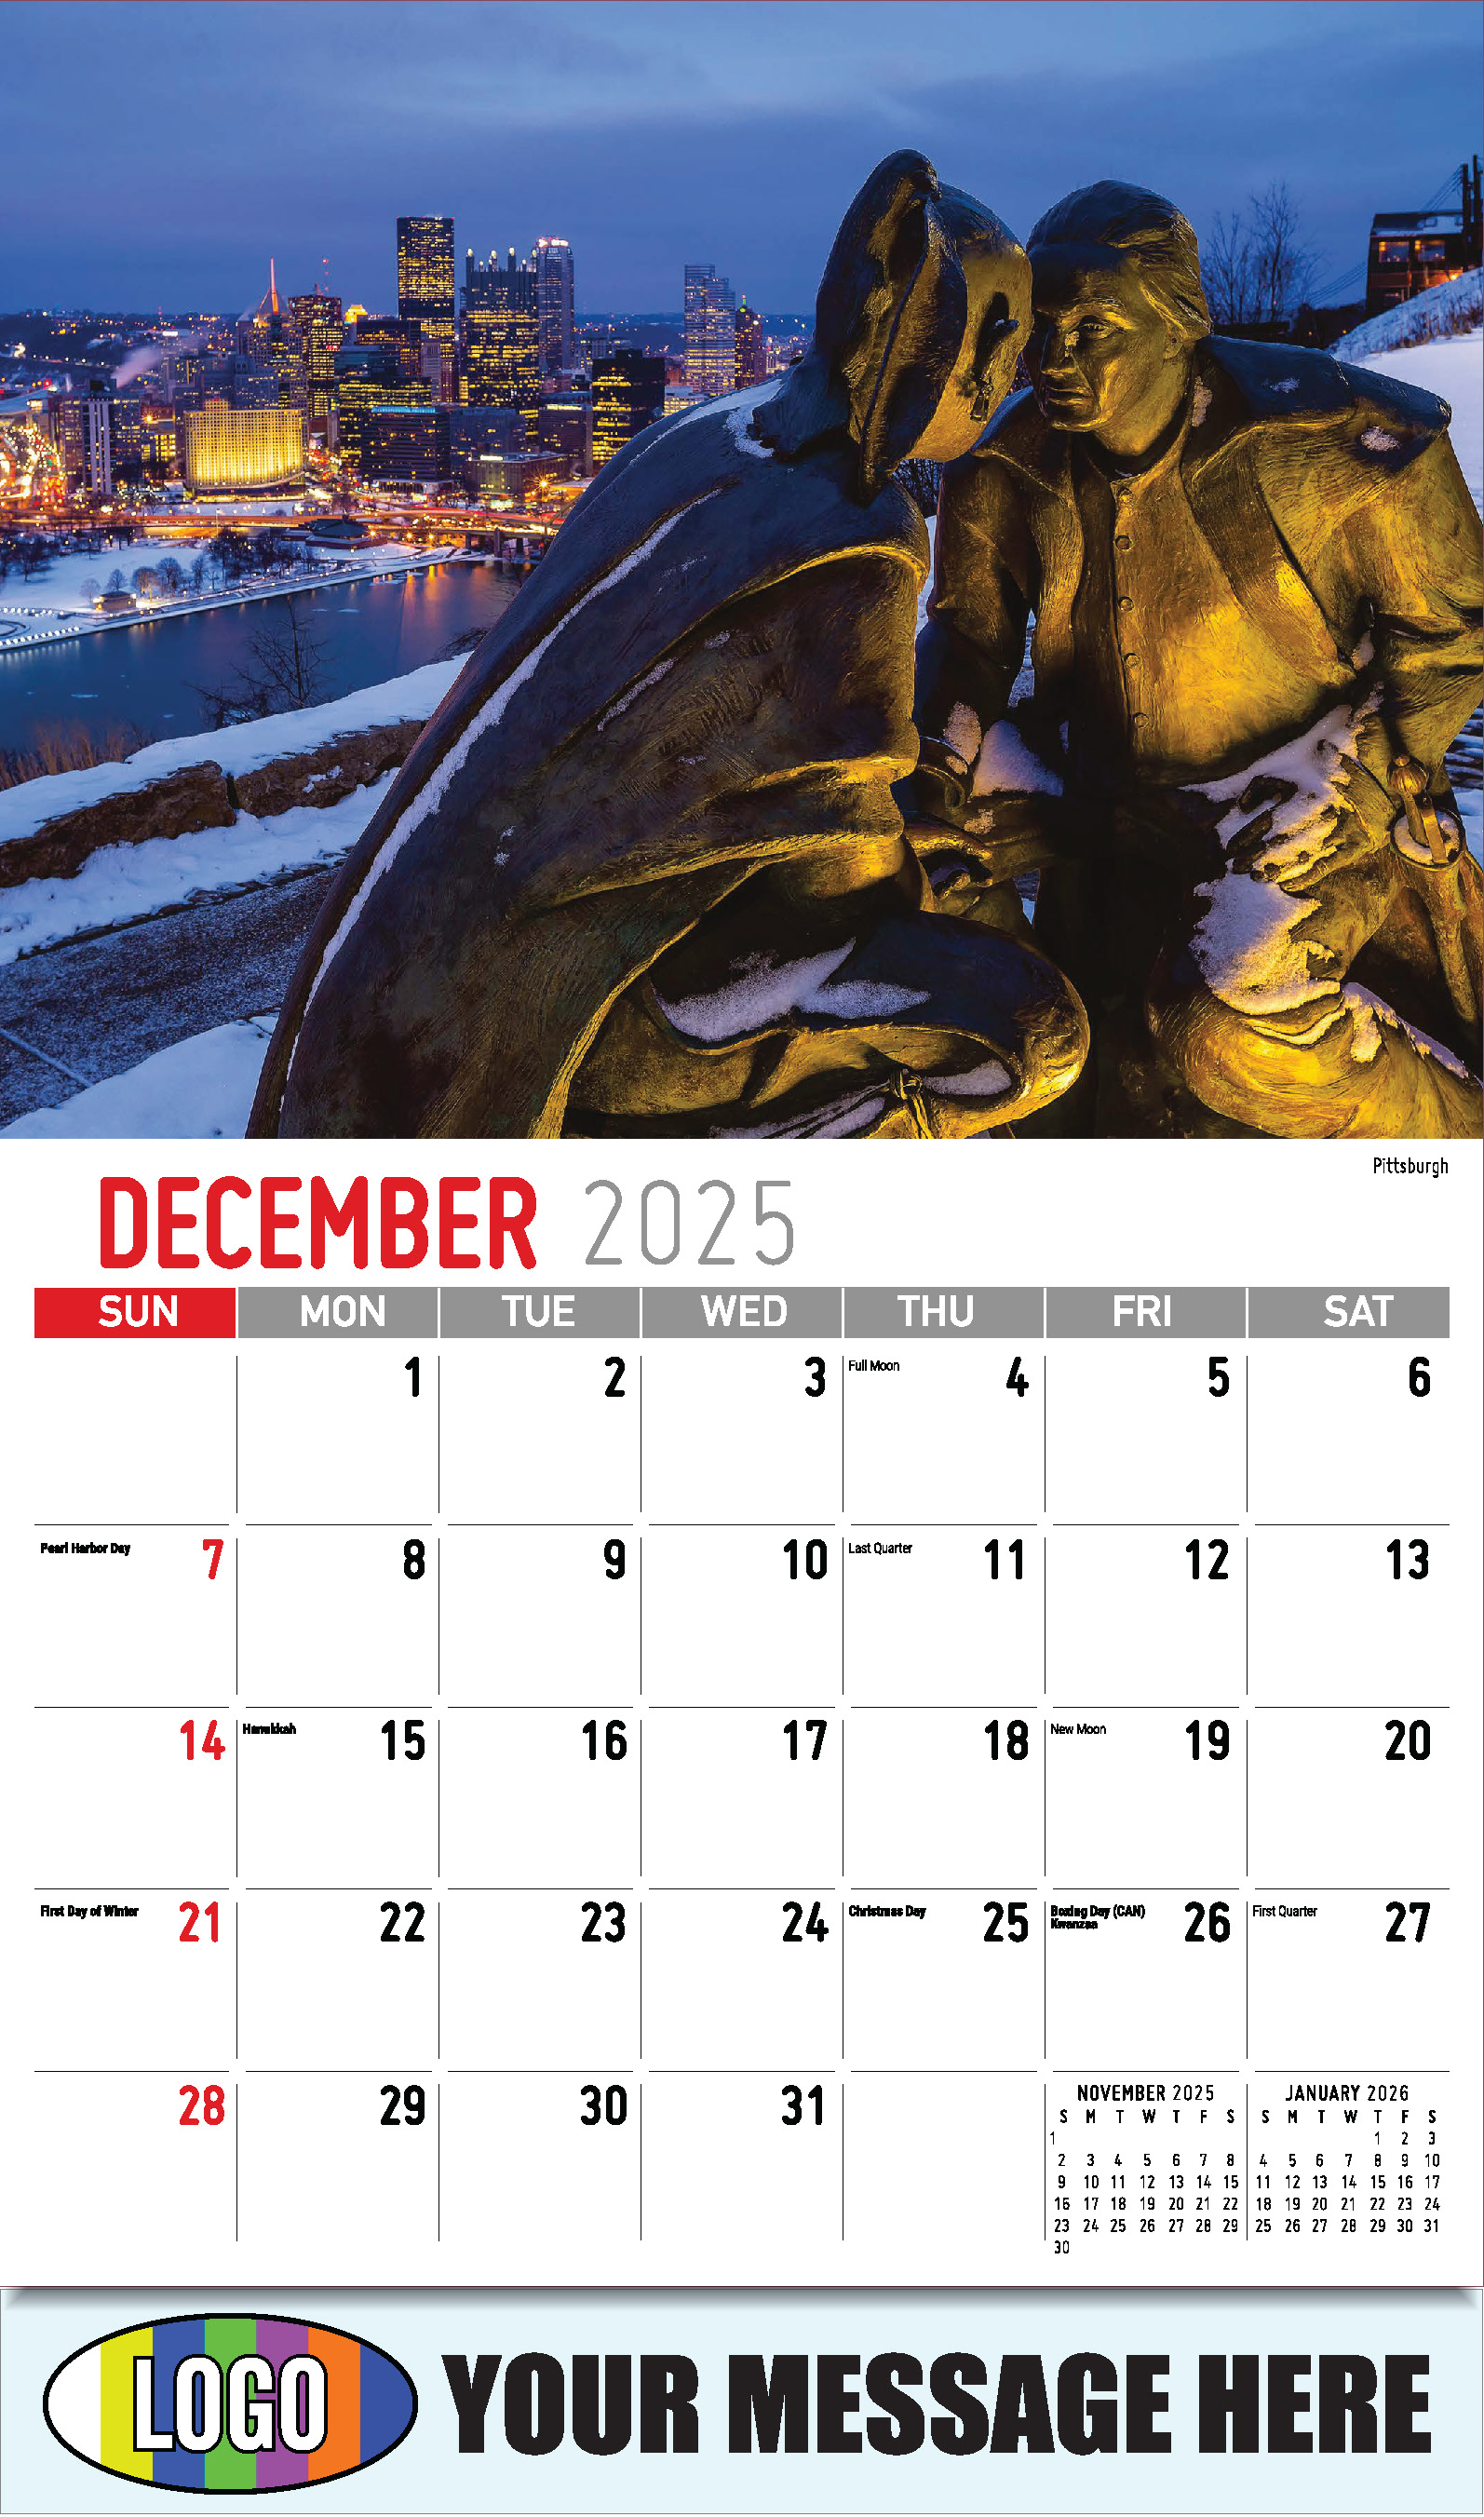 Scenes of Pennsylvania 2025 Business Promotion Calendar - December